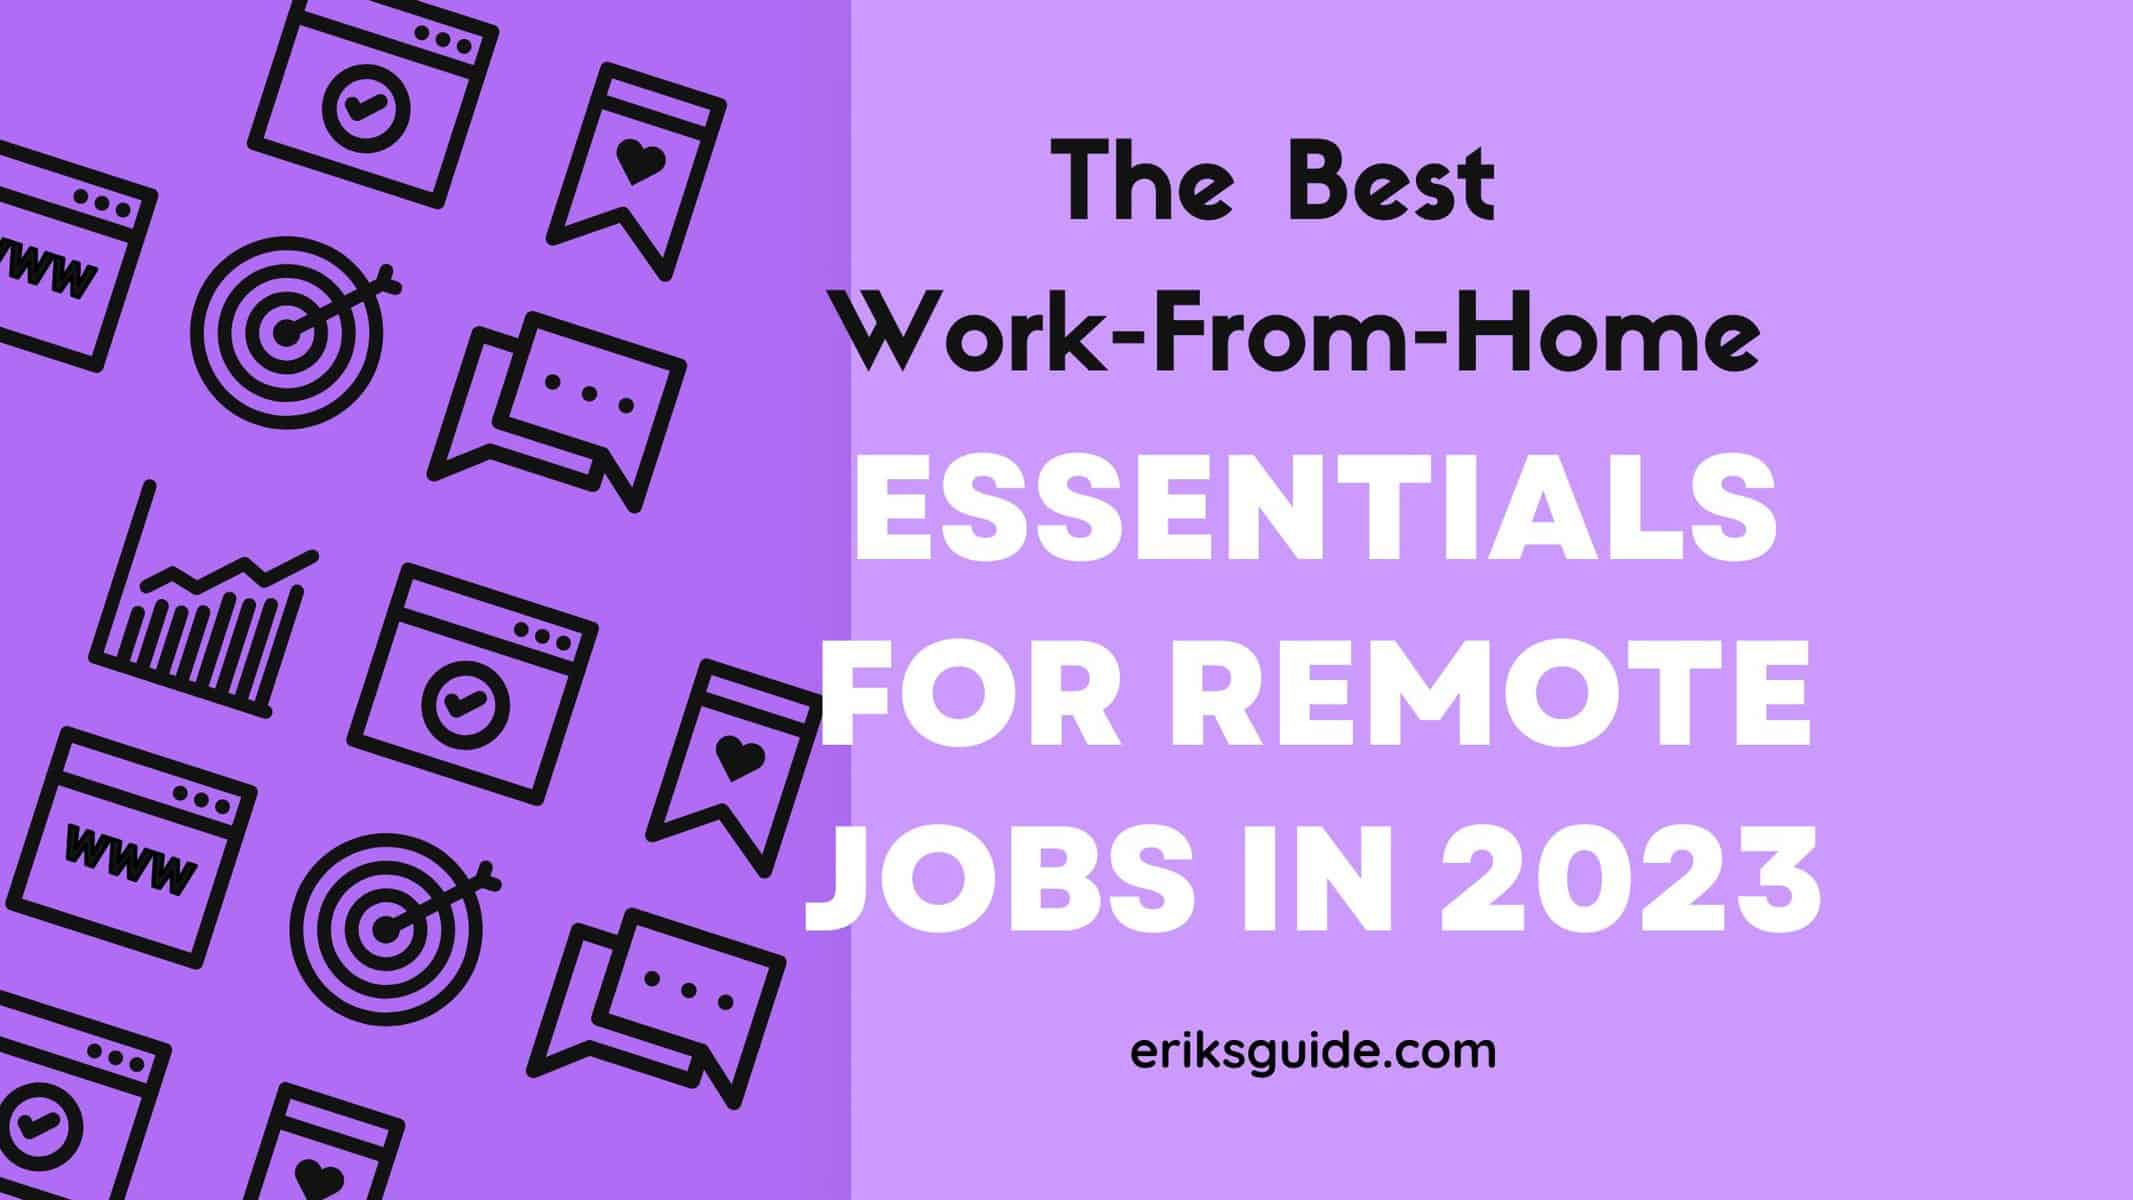 https://eriksguide.com/wp-content/uploads/2023/03/work-from-home-essentials.jpg